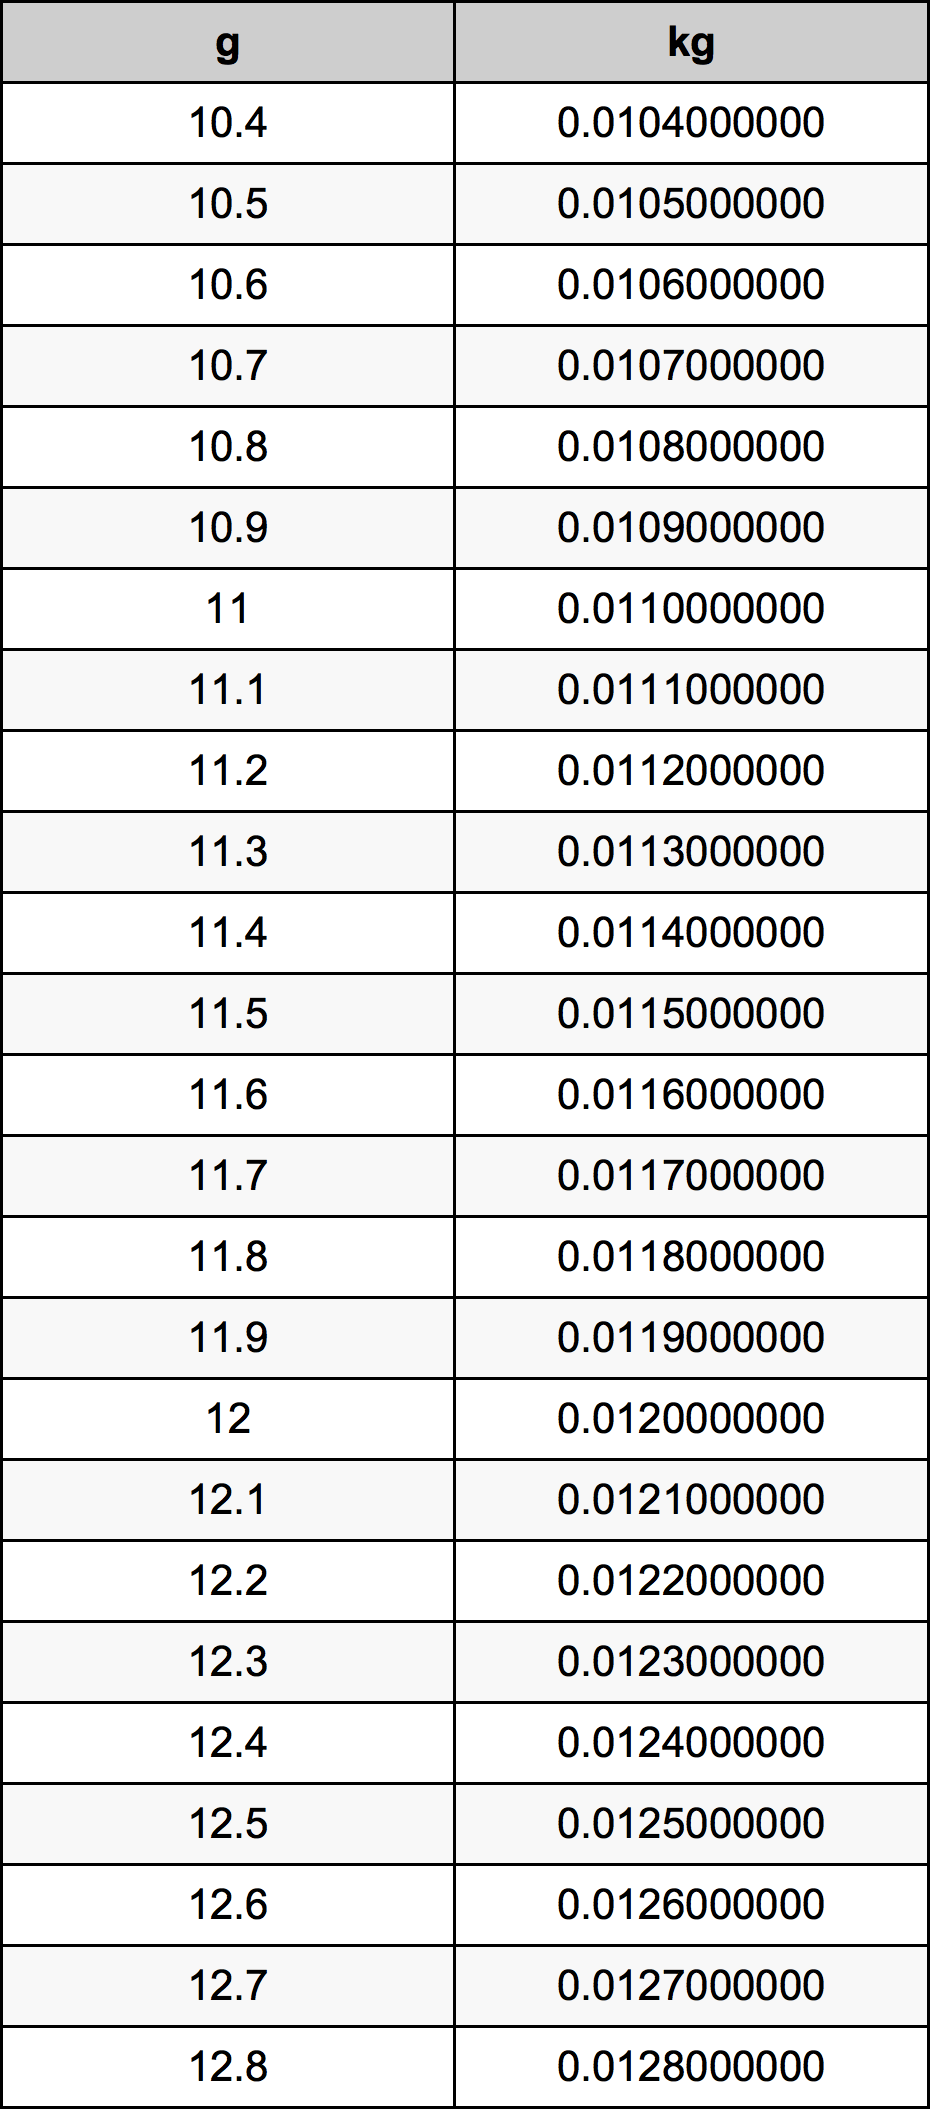 11.6 غرام جدول تحويل